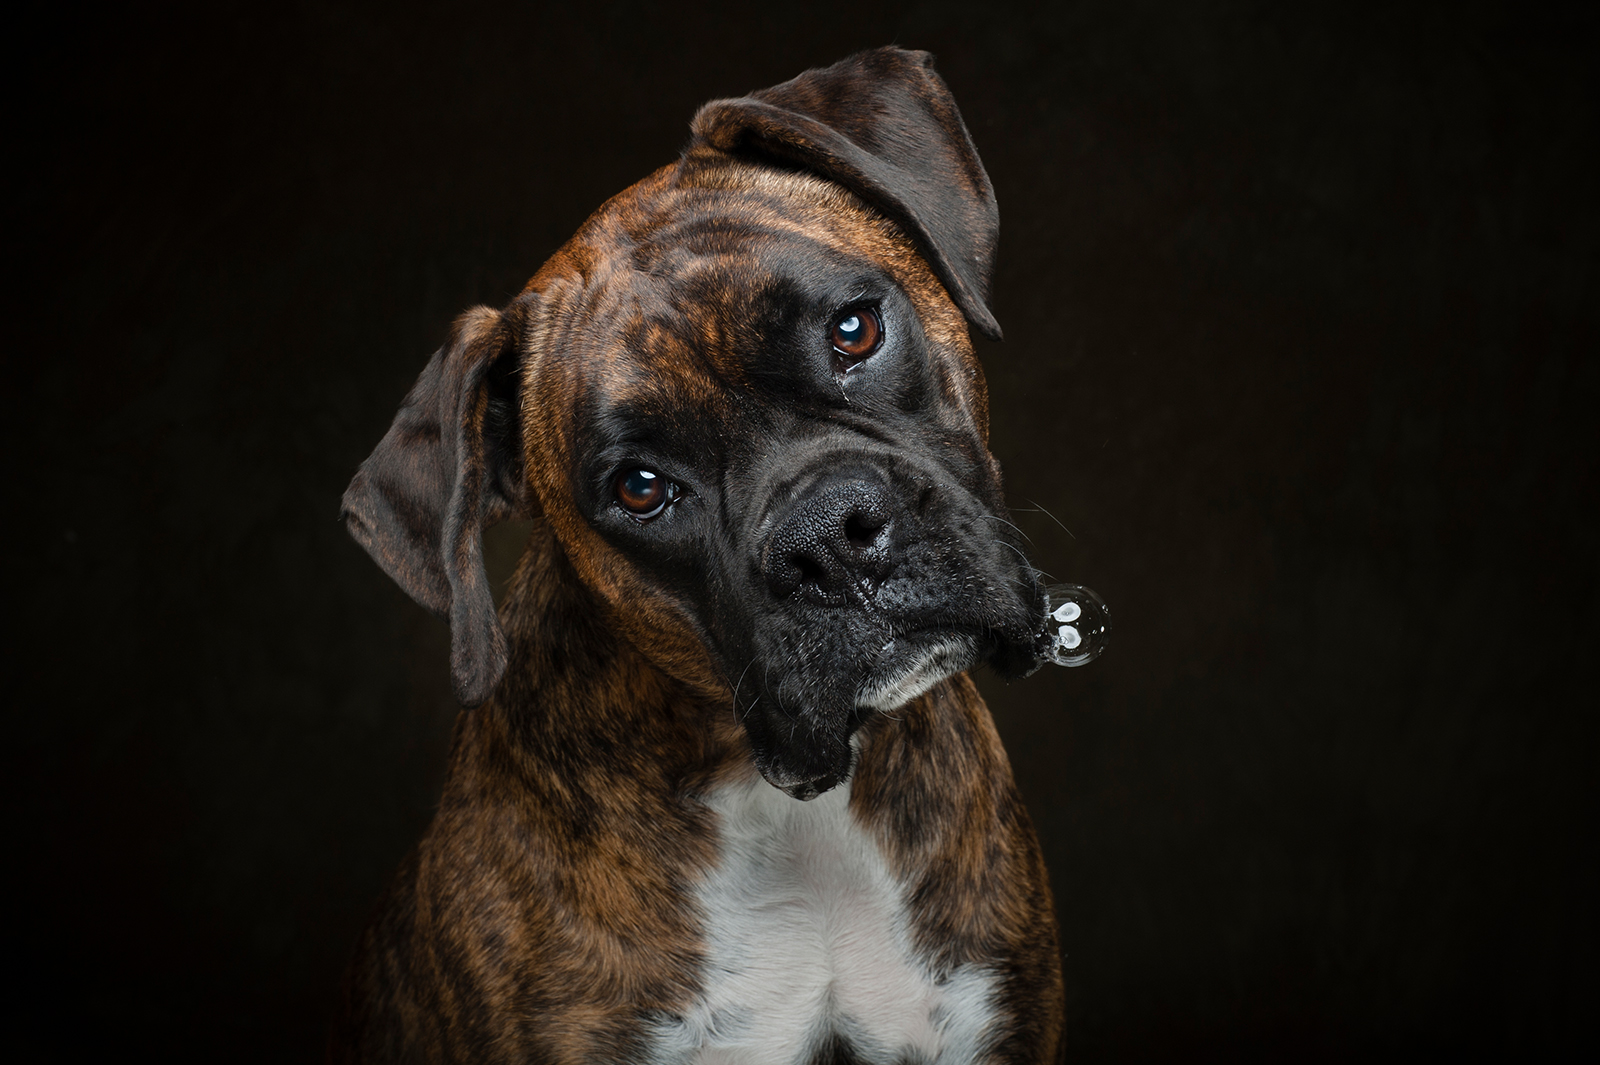 Jason Millstein Photography - Arizona's best Animal and Pet Photographer